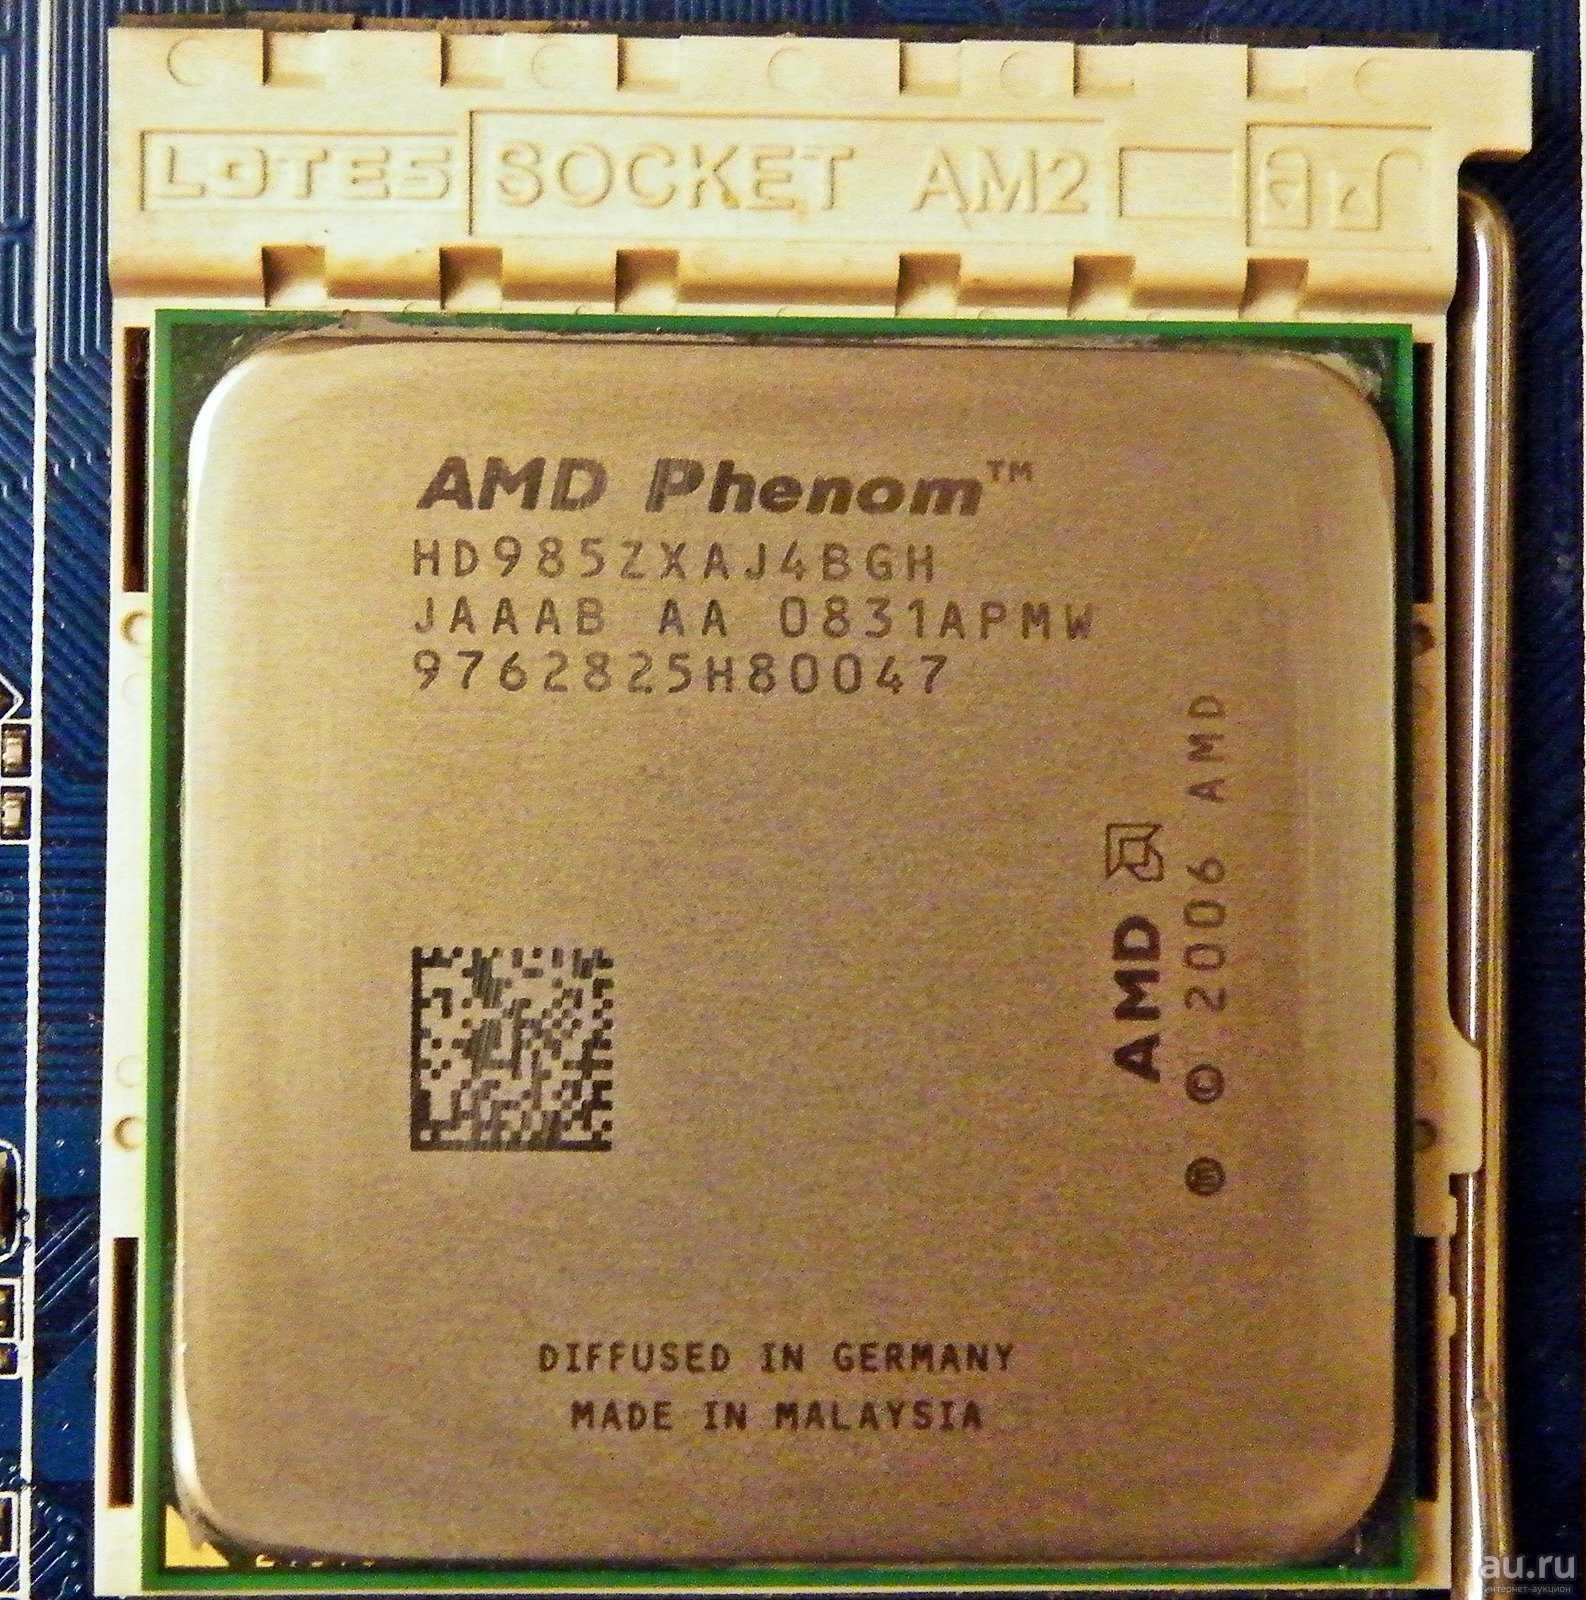 Amd phenom ii x4 955 - обзор процессора. тесты и характеристики.